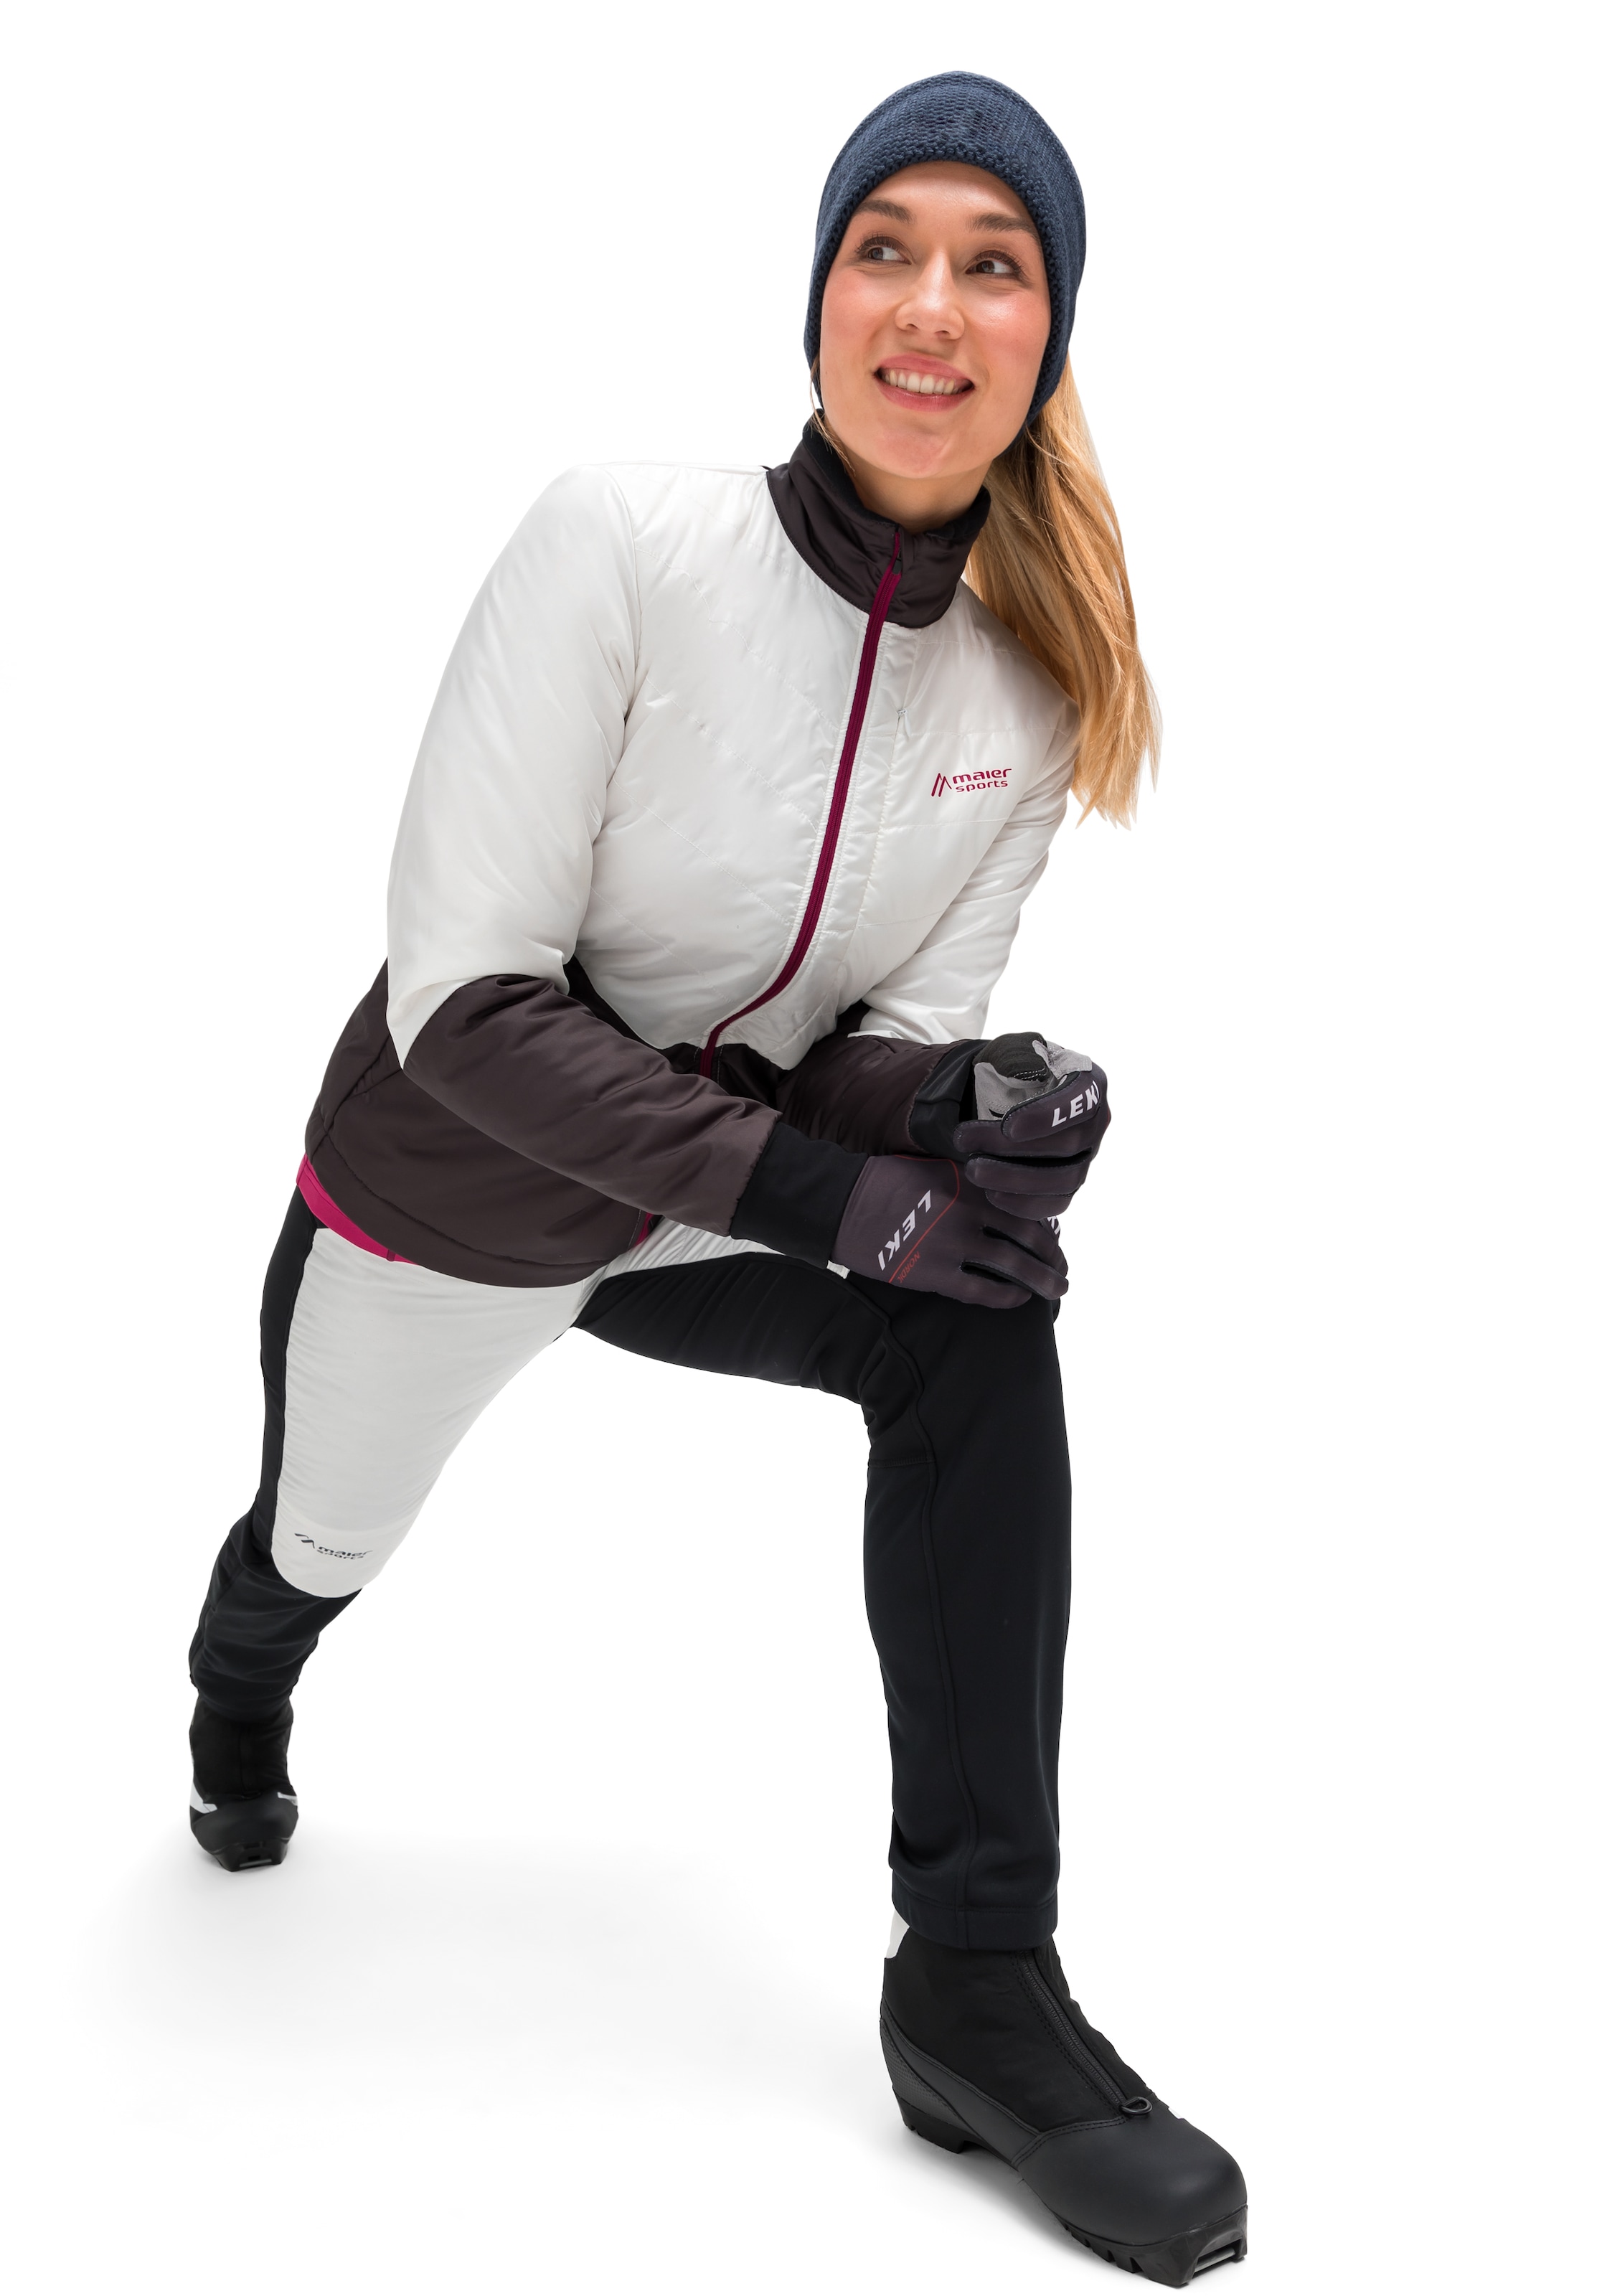 Maier Sports Skijacke »Skjoma Wool W«, Damen Langlaufjacke, wattierte Outdoorjacke mit 3 geräumige Taschen